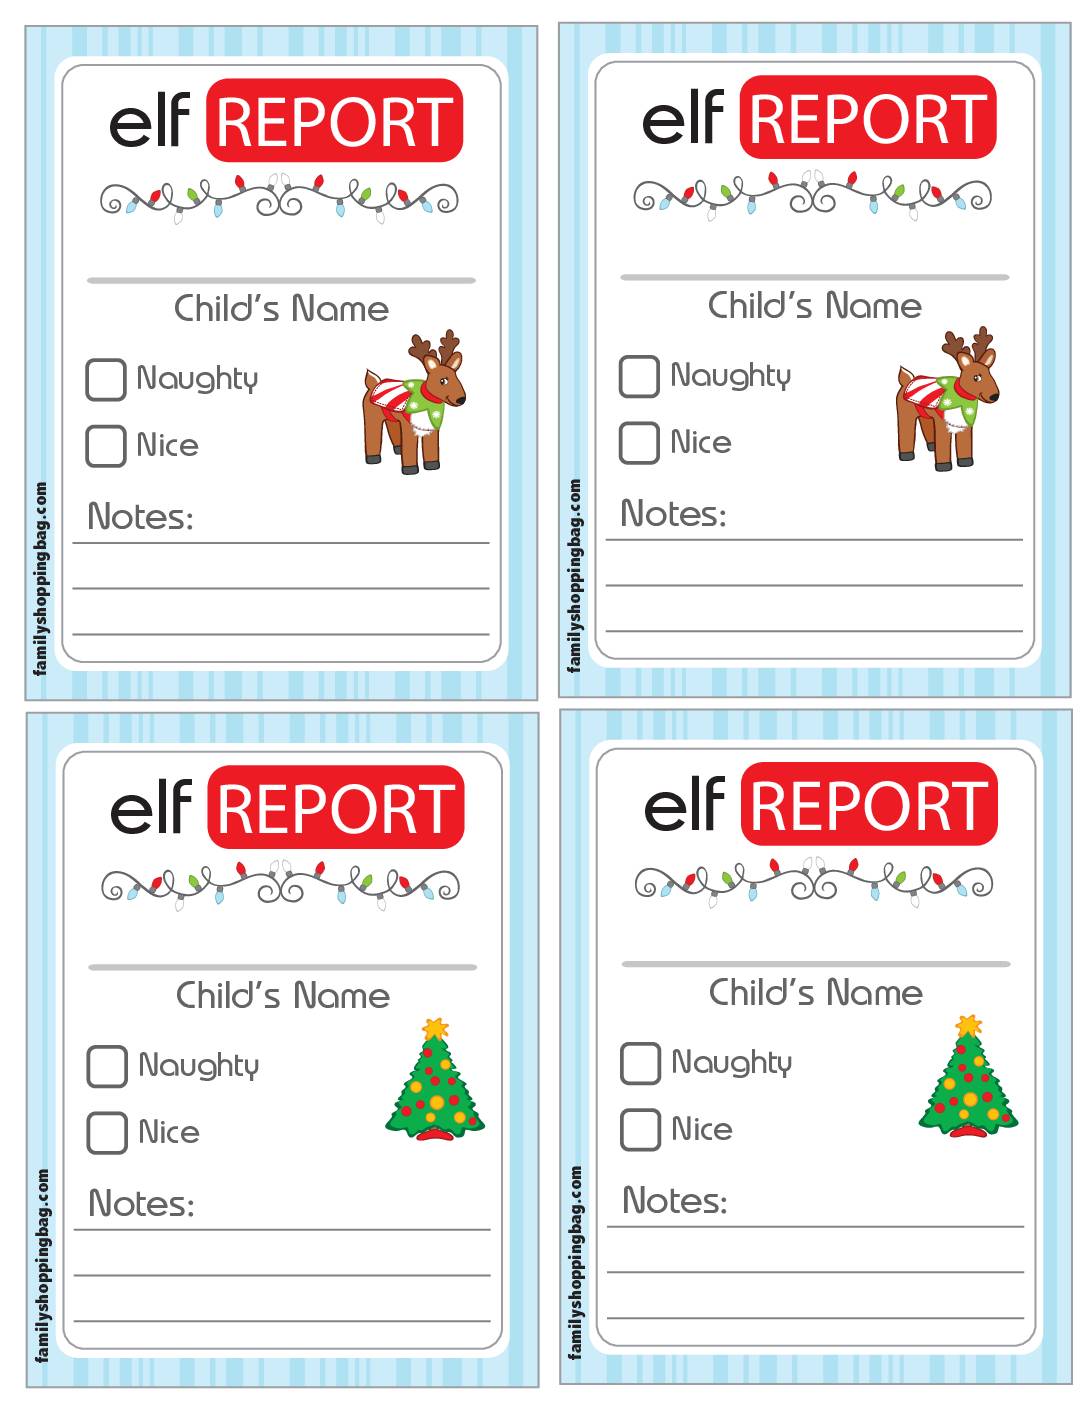 elf report Forms